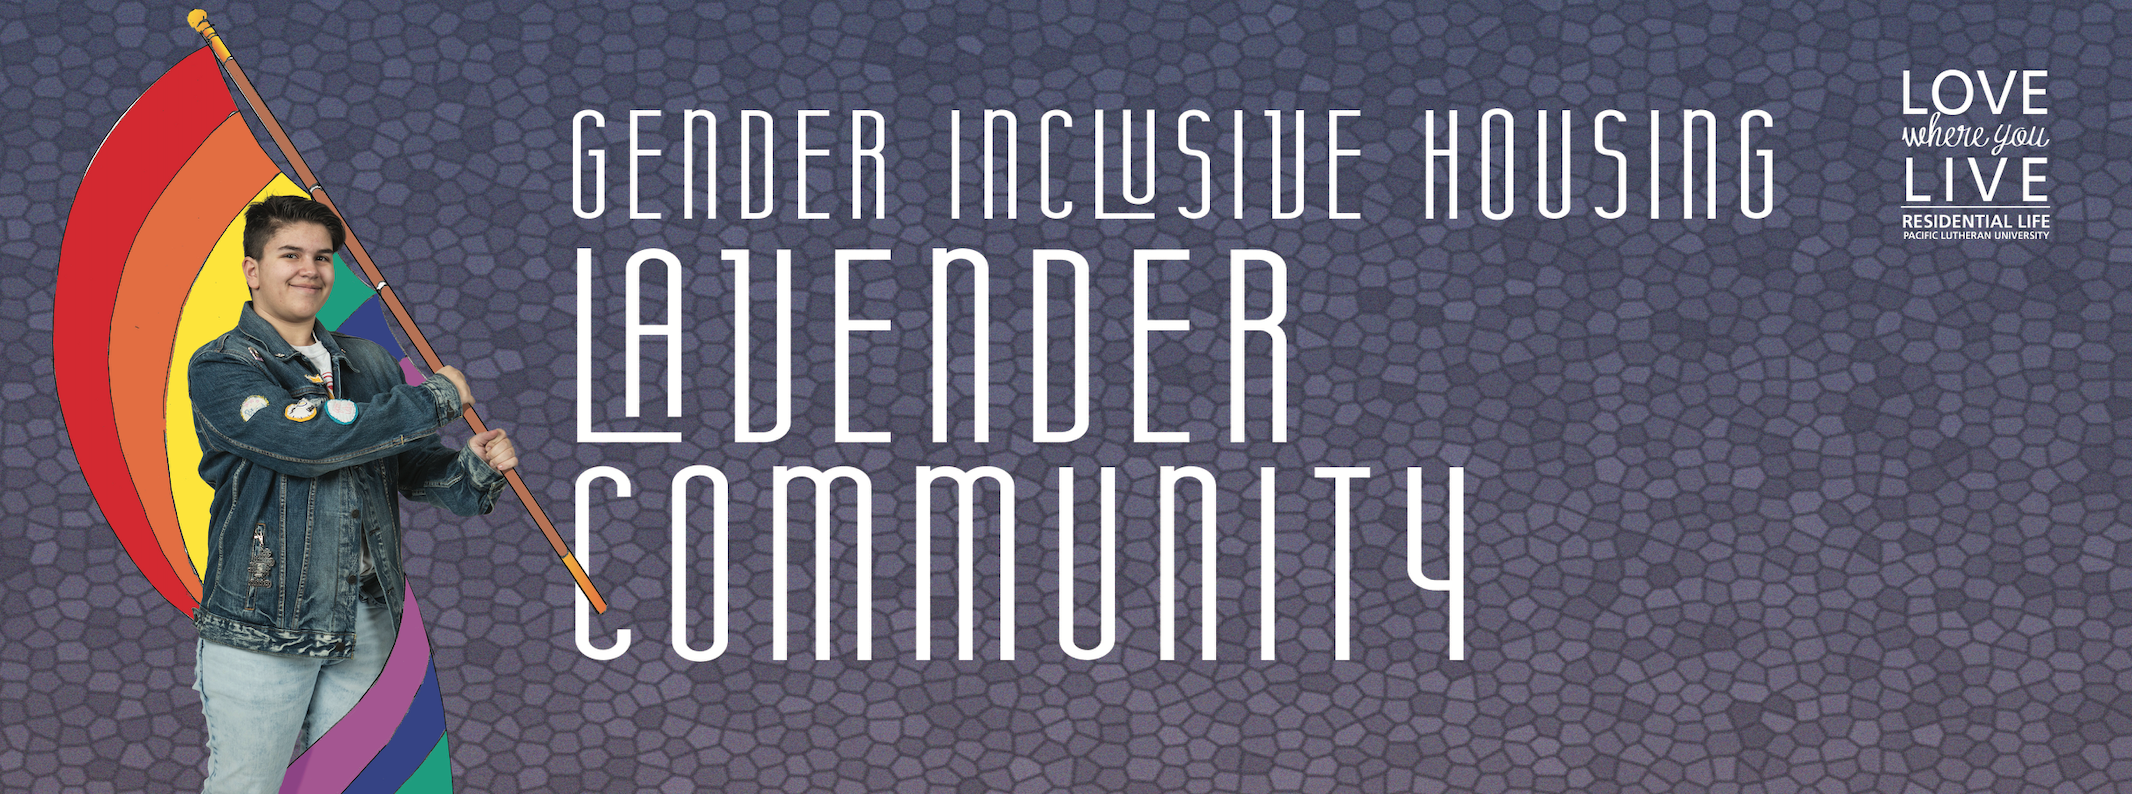 Gender Inclusive Housing & Lavender Community